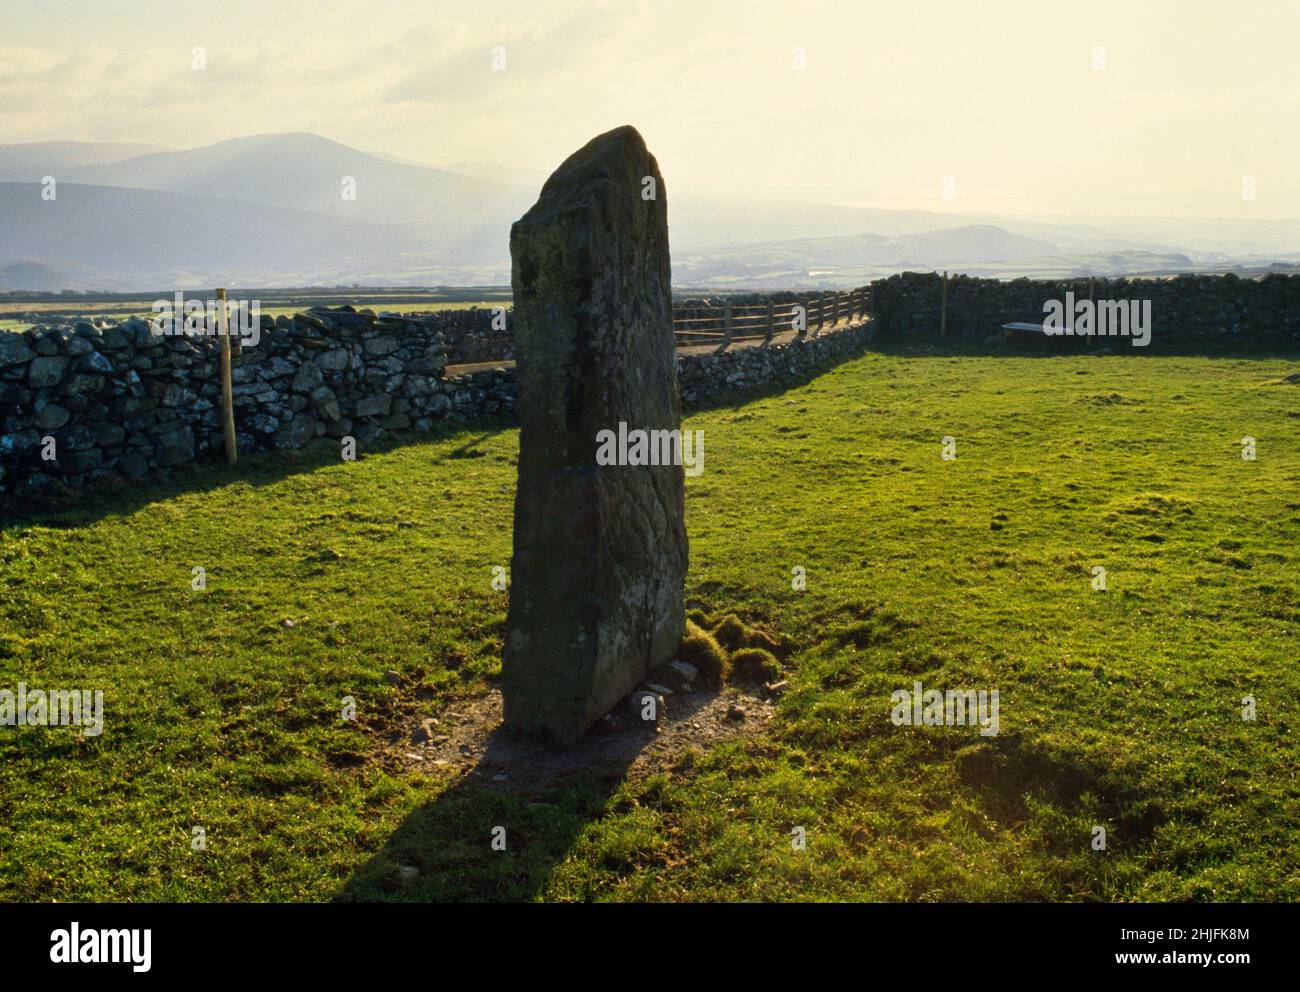 Looking S from Fonlief Hir (Stone A) standing stone near Moel Goedog above Harlech, Gwynedd, Wales, UK, to the mountains & coast of Dyffryn Ardudwy. Stock Photo